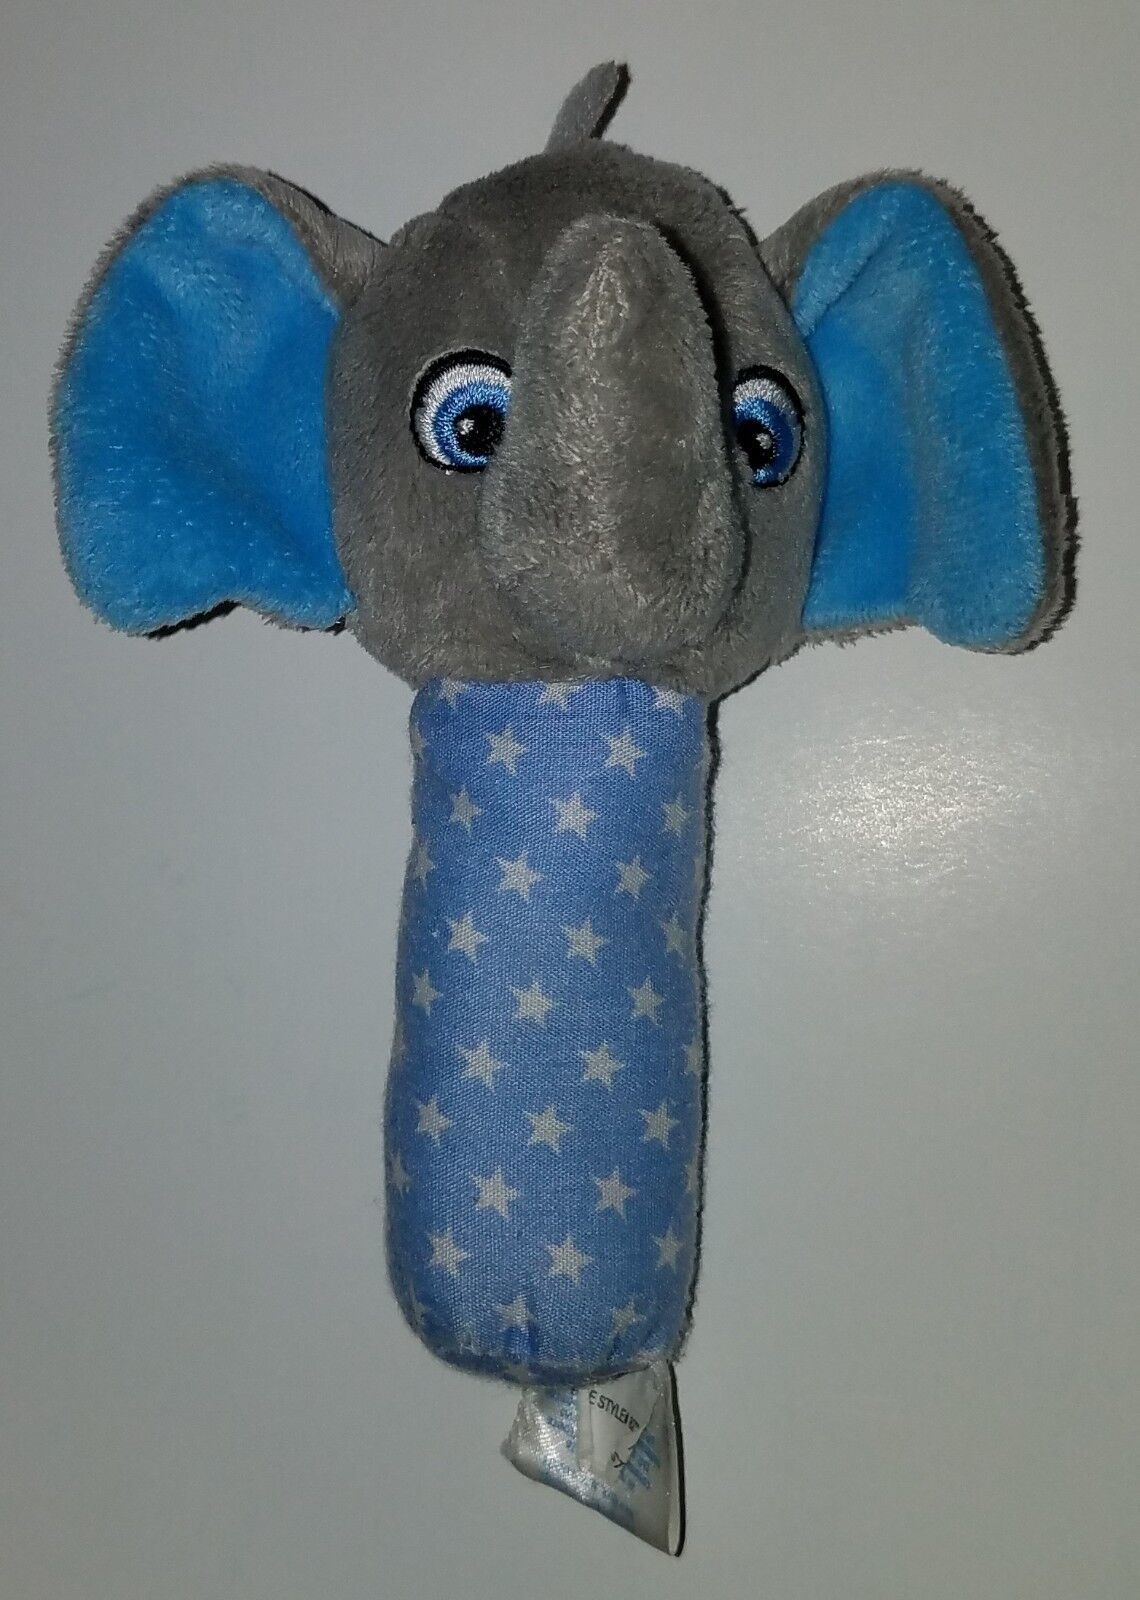 Primary image for Garanimals Elephant Rattle Plush 5" Baby Toy Stuffed Animal Blue Gray